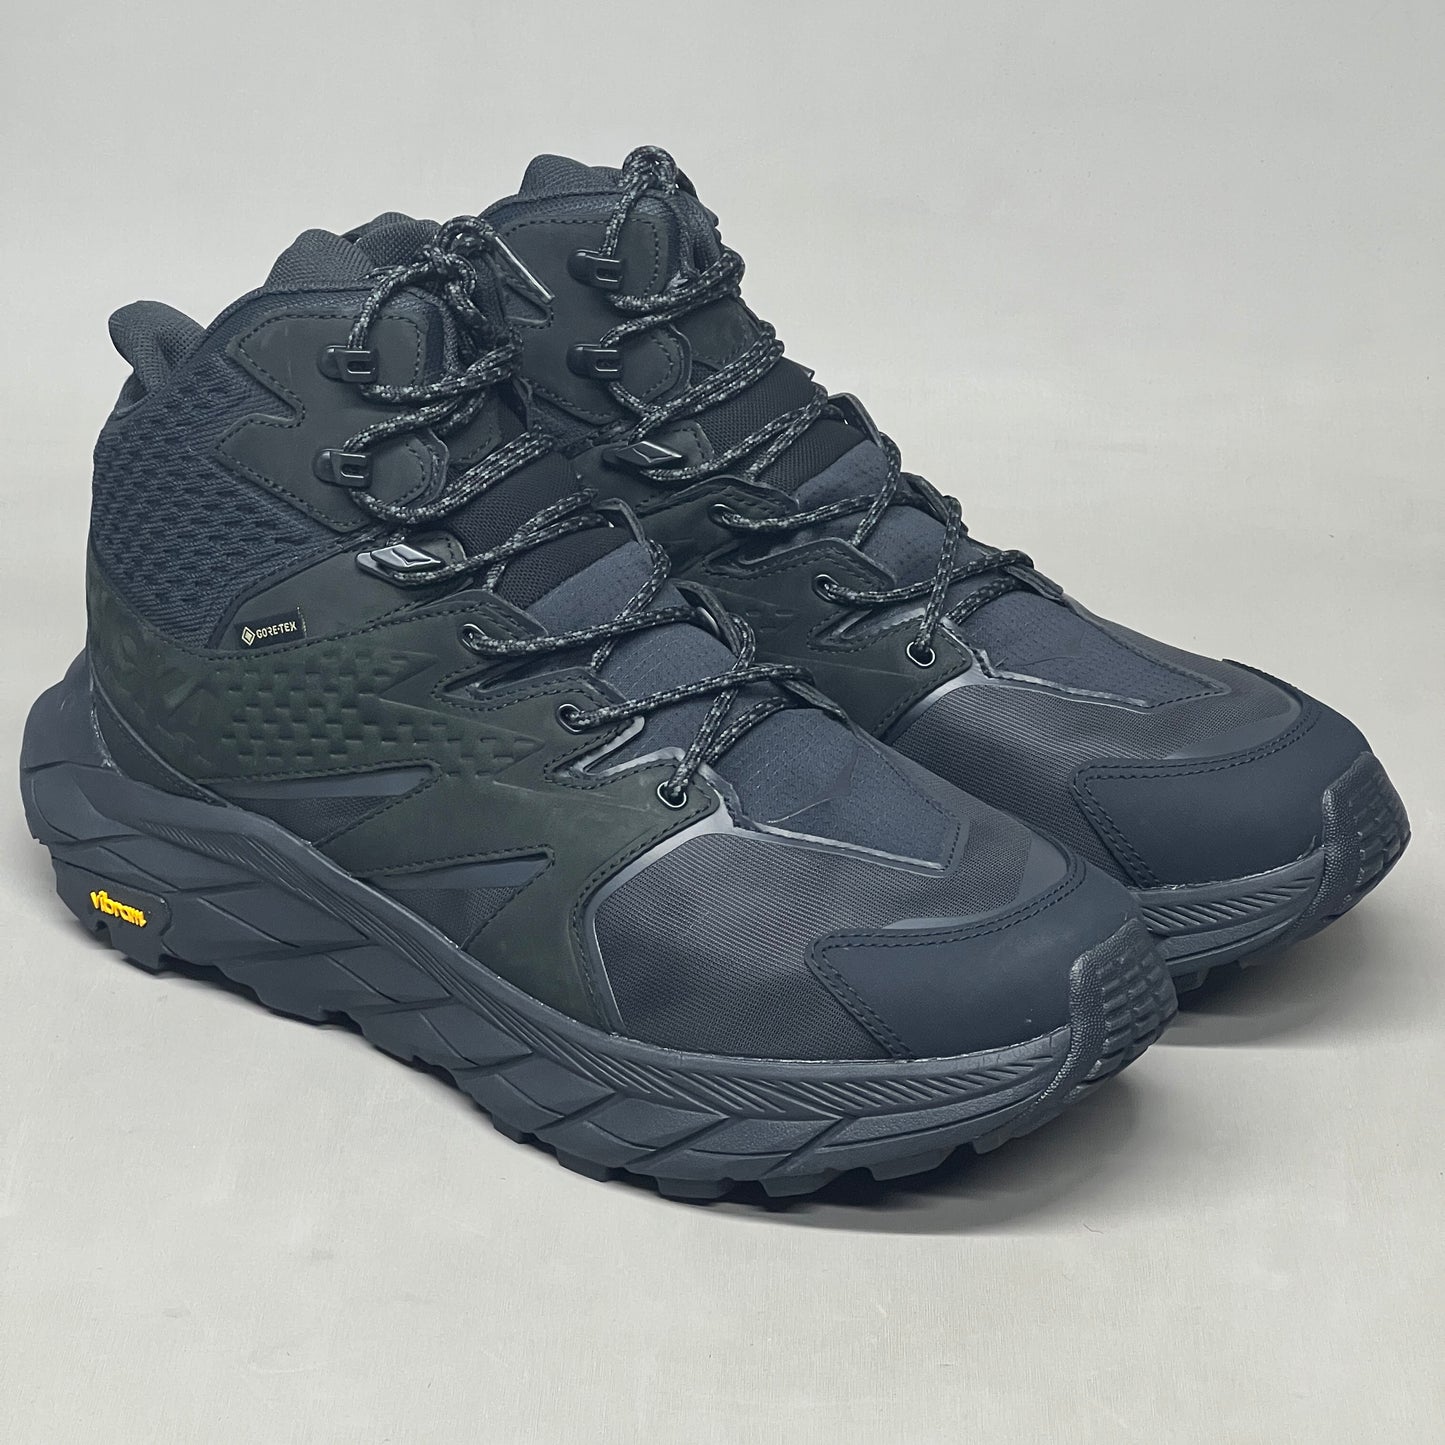 HOKA Anacapa Mid GTX Hiking Boot Men's Size 7D 1122018 BBLC(New)